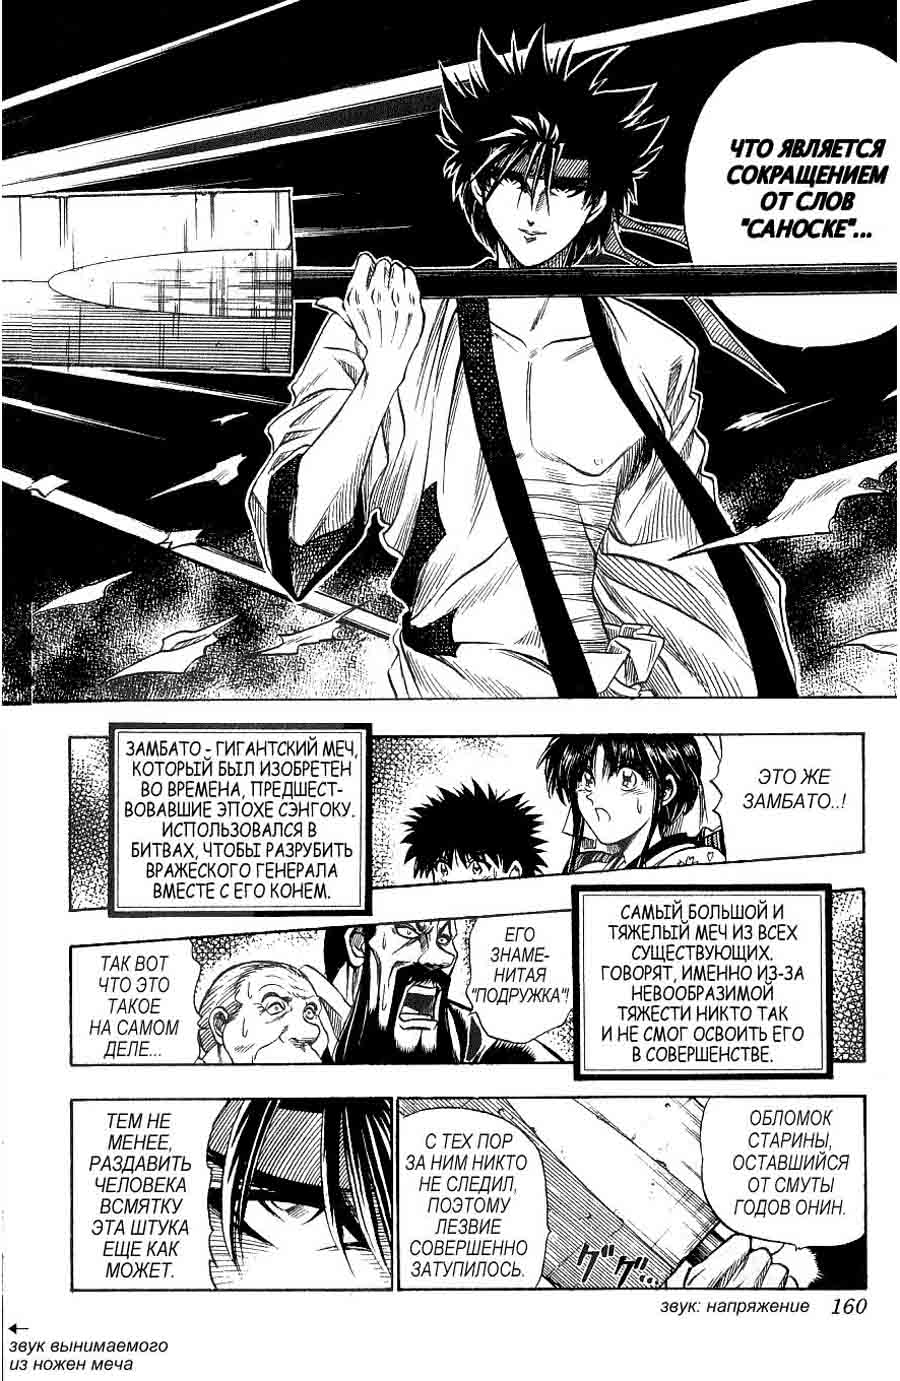 Rurouni Kenshin (Samurai X/ ) -   ></a>
<script language=JavaScript> 
  var txt = 